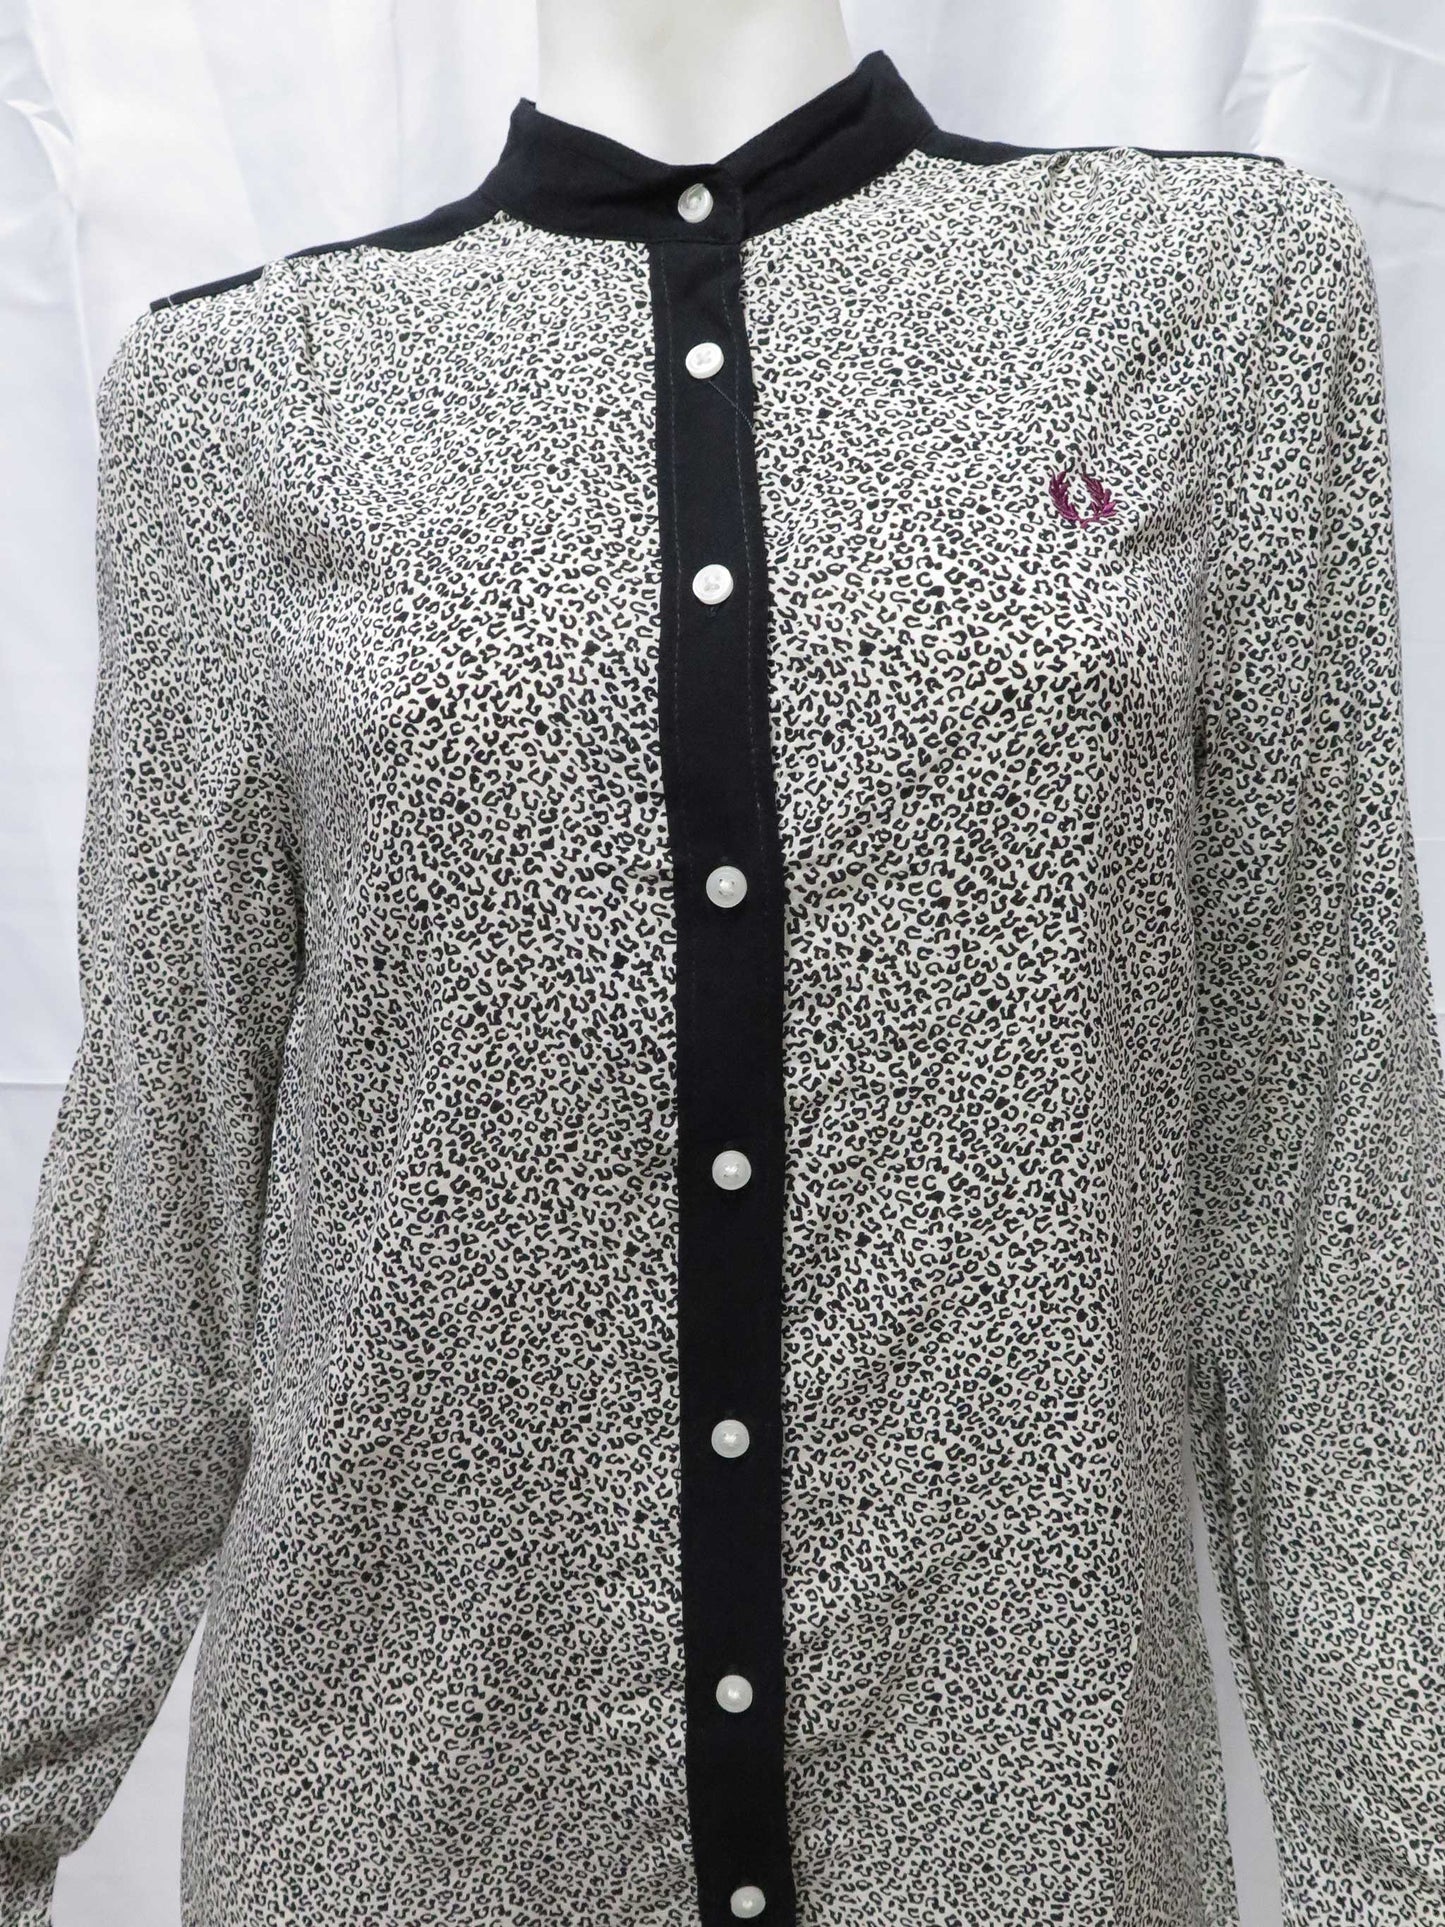 Leopard Print L/S Shirt (ivory)